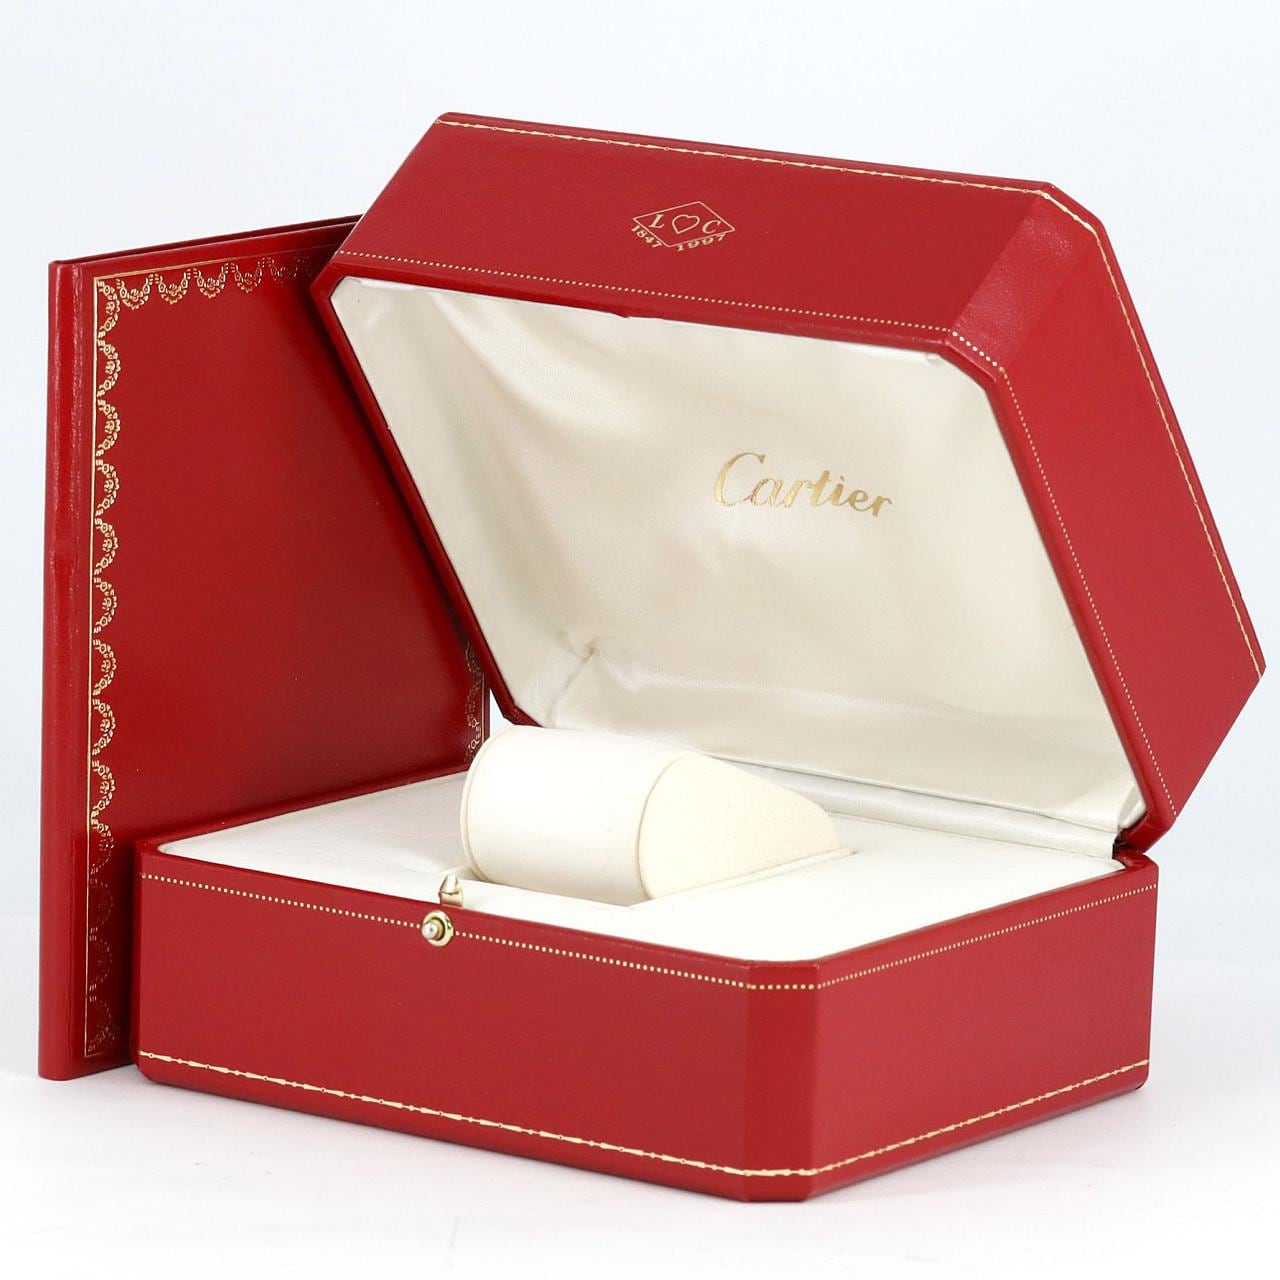 Cartier Bee Plan YG・150th LIMITED W1524557 YG石英